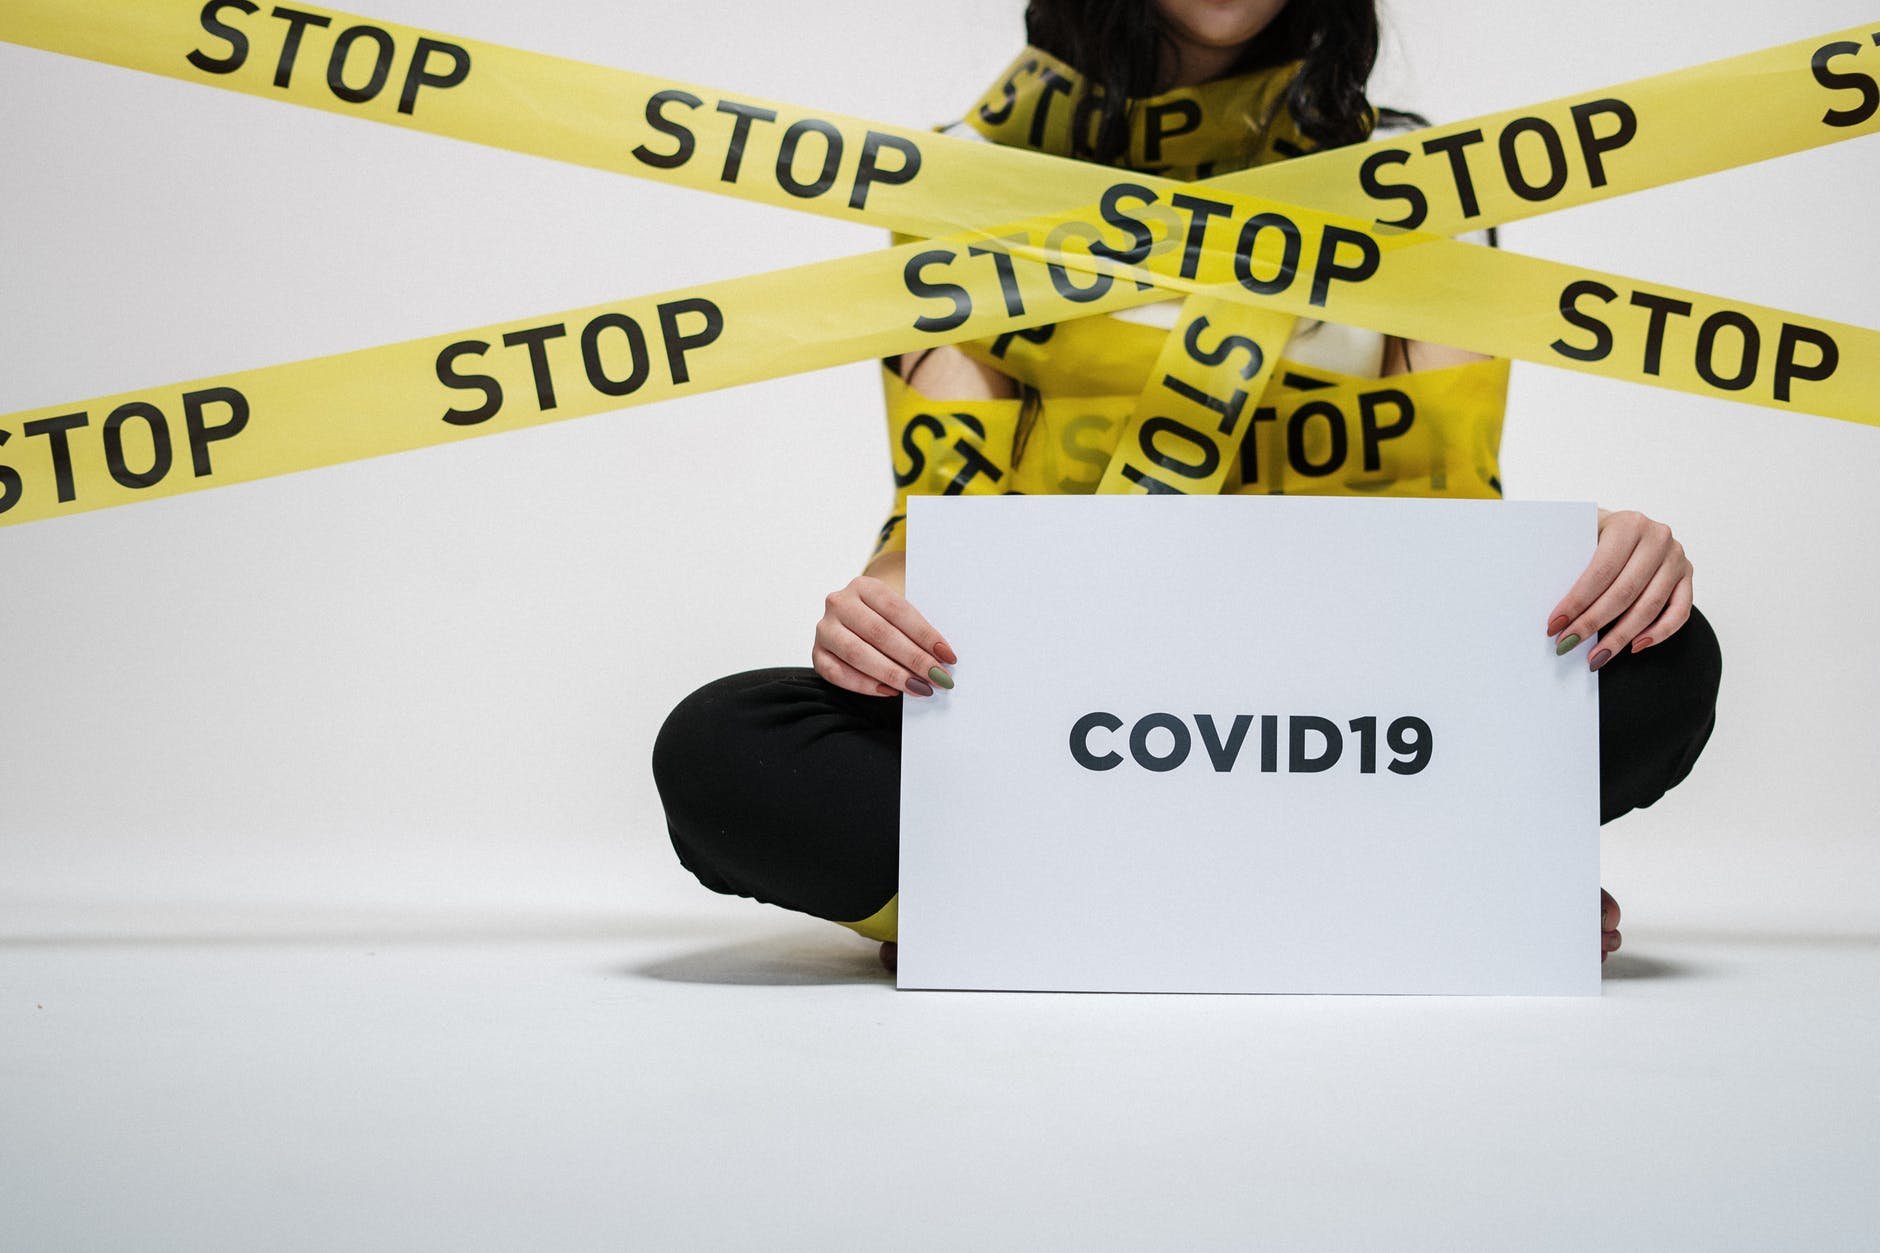 488 са новите случаи на коронавирус у нас за последните